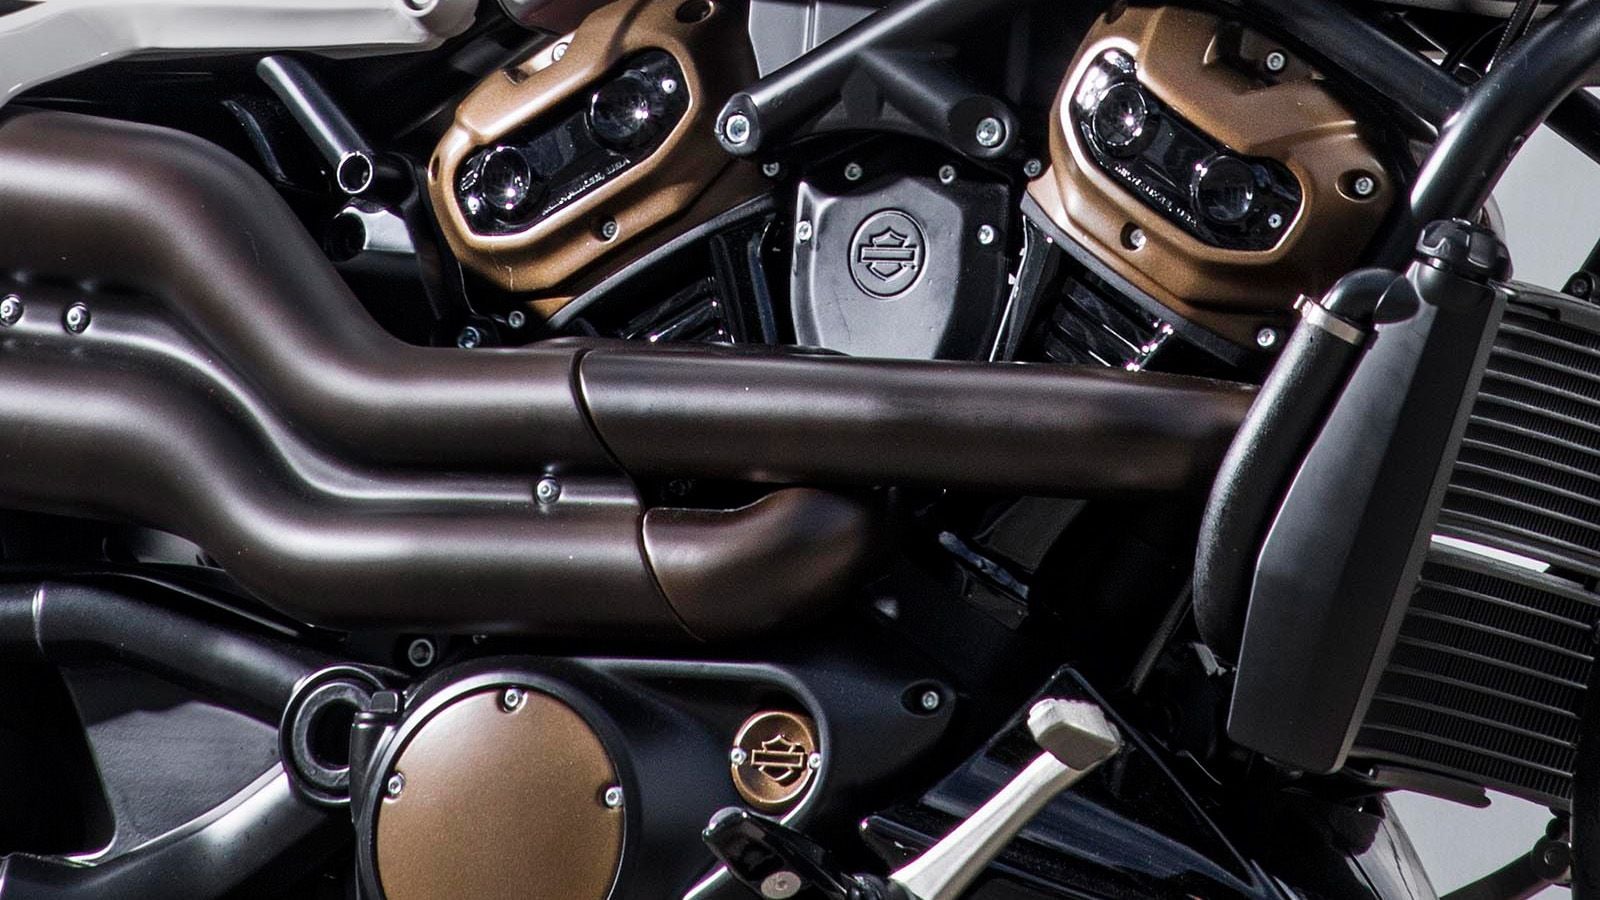 Harley-Davidson Revolution Max 1,250cc V-Twin, Liquid-Cooled Engine